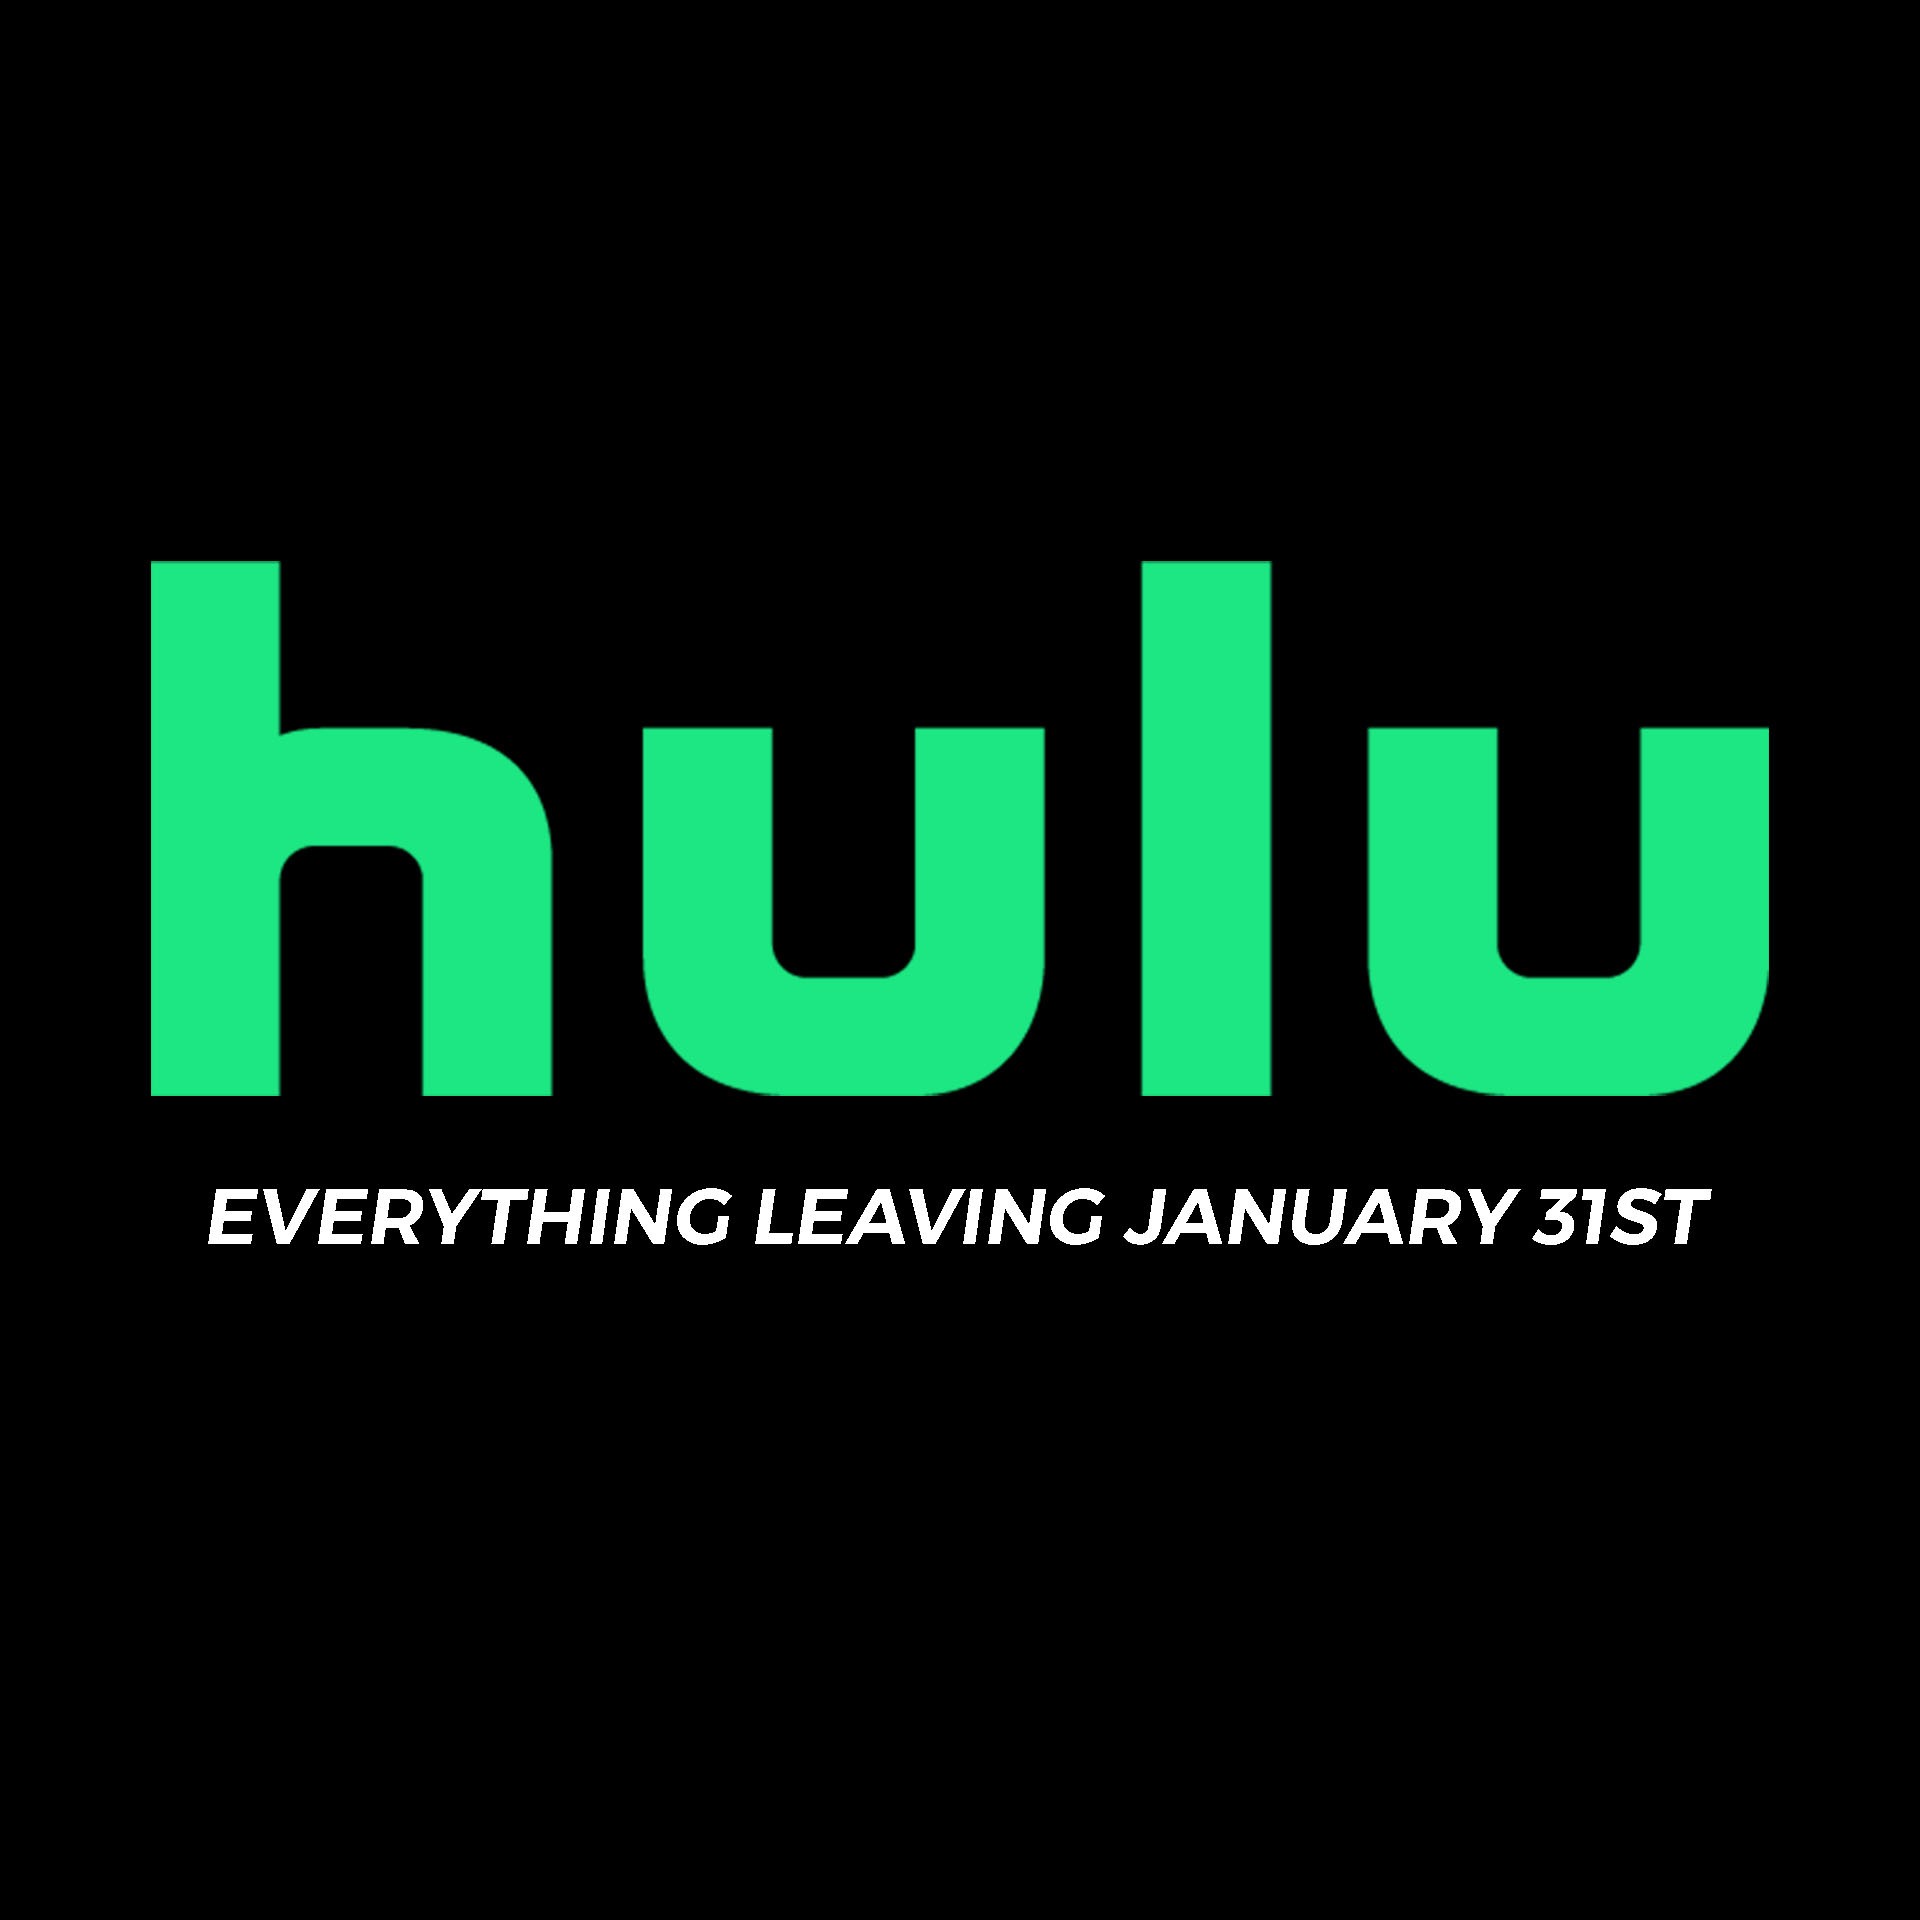 Everything Leaving Hulu On January 31st